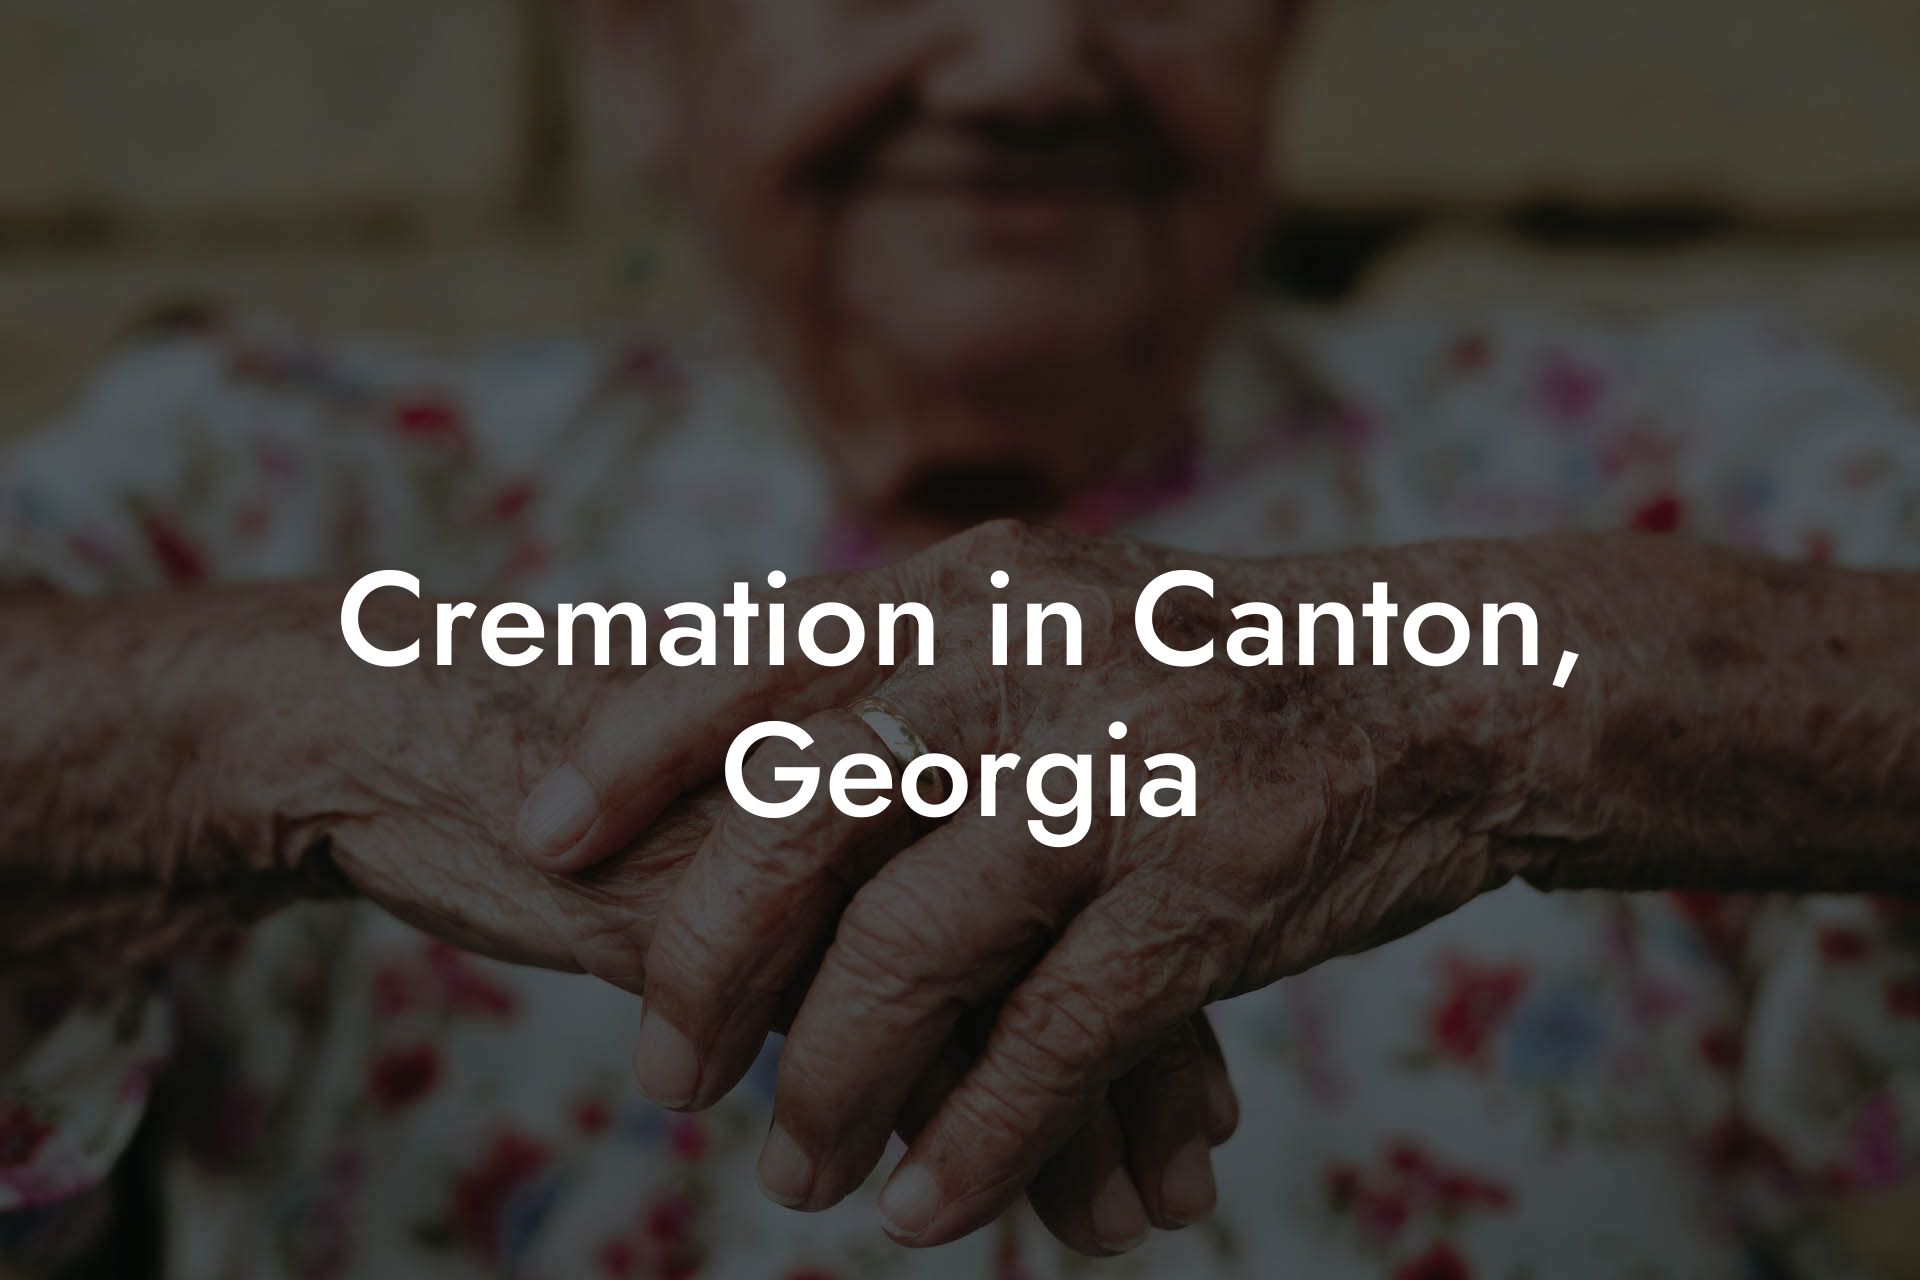 Cremation in Canton, Georgia